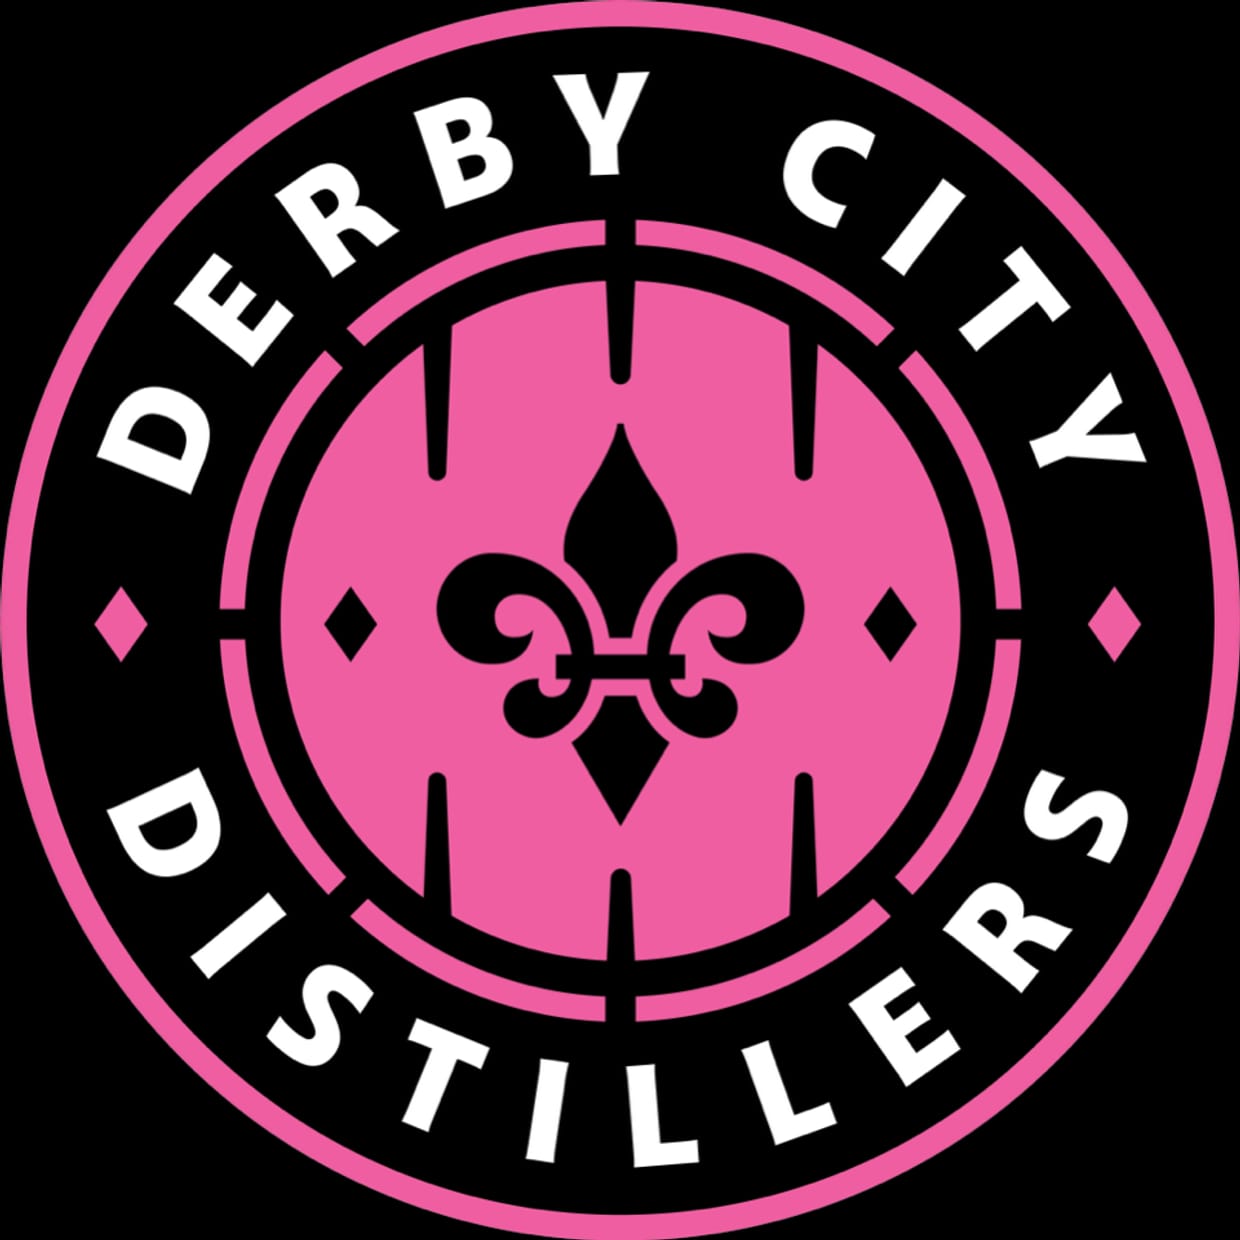 Exhibition Game: Derby City Distillers v. West Virginia Grind